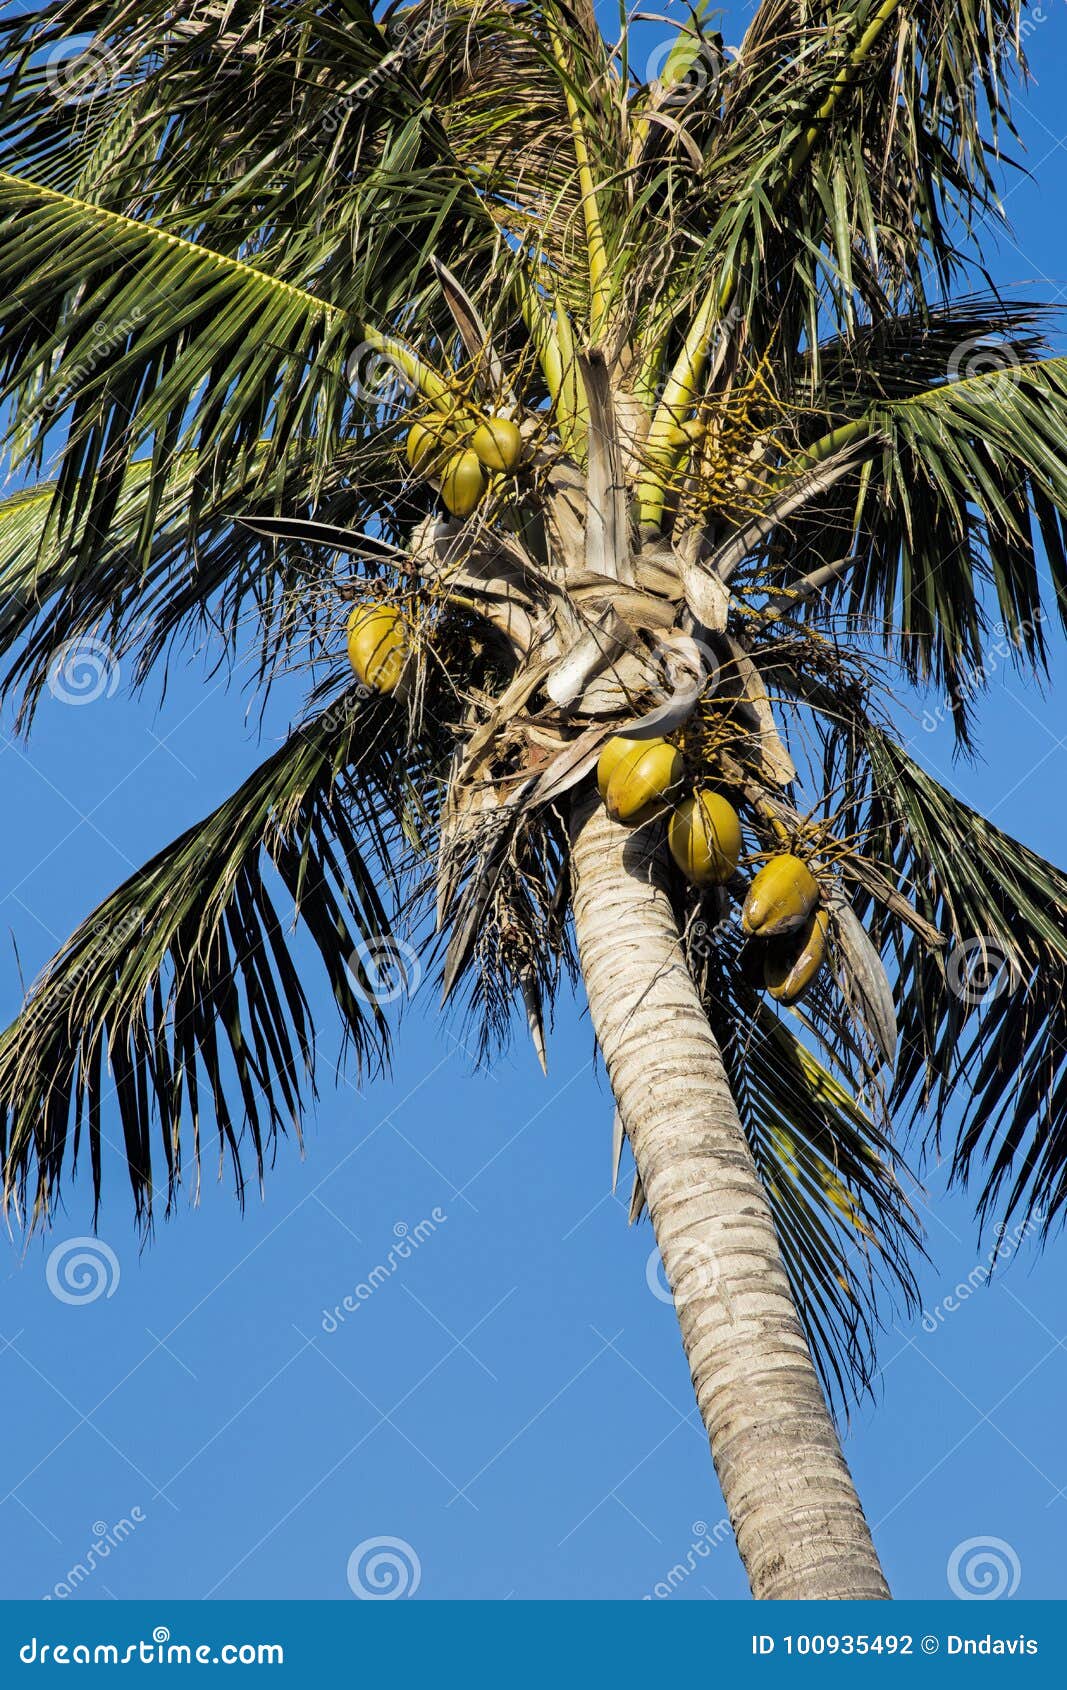 coconut palm tree, cocos nucifera, with a blue sky